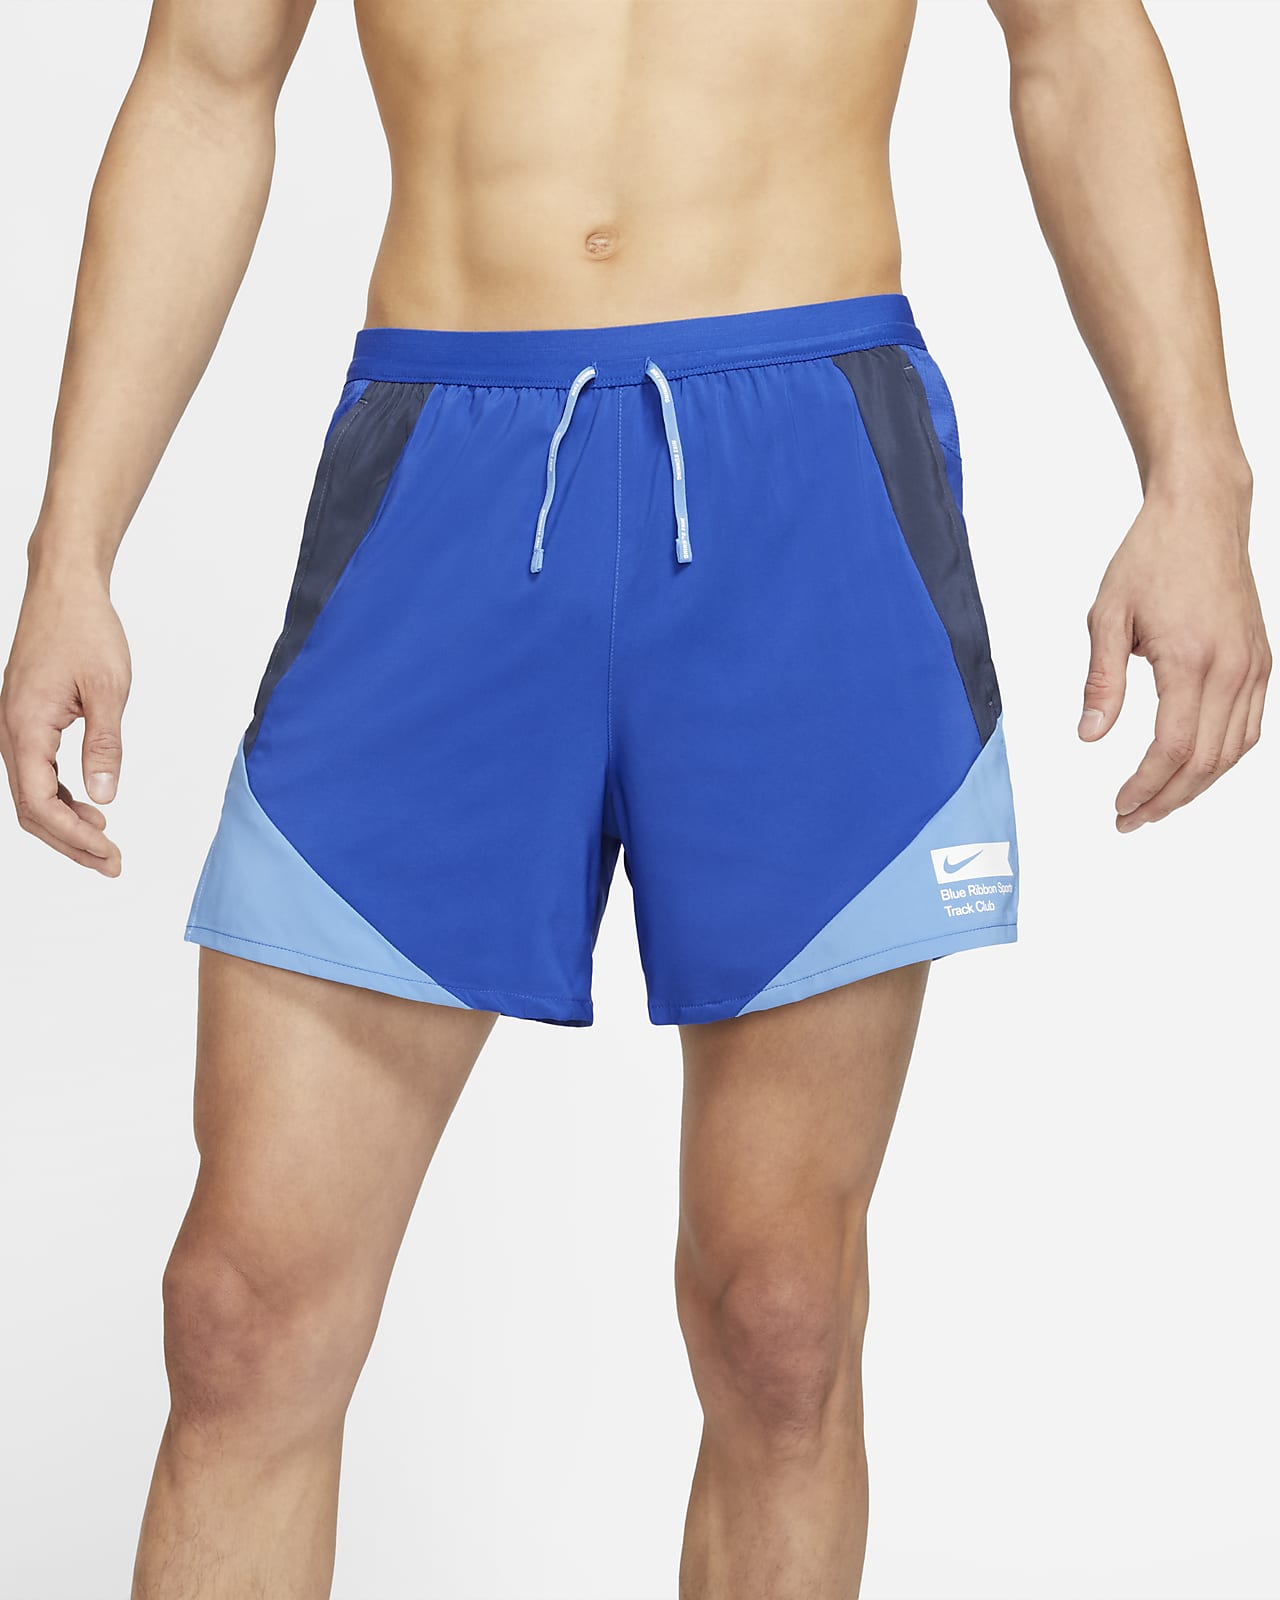 nike flex shorts blue